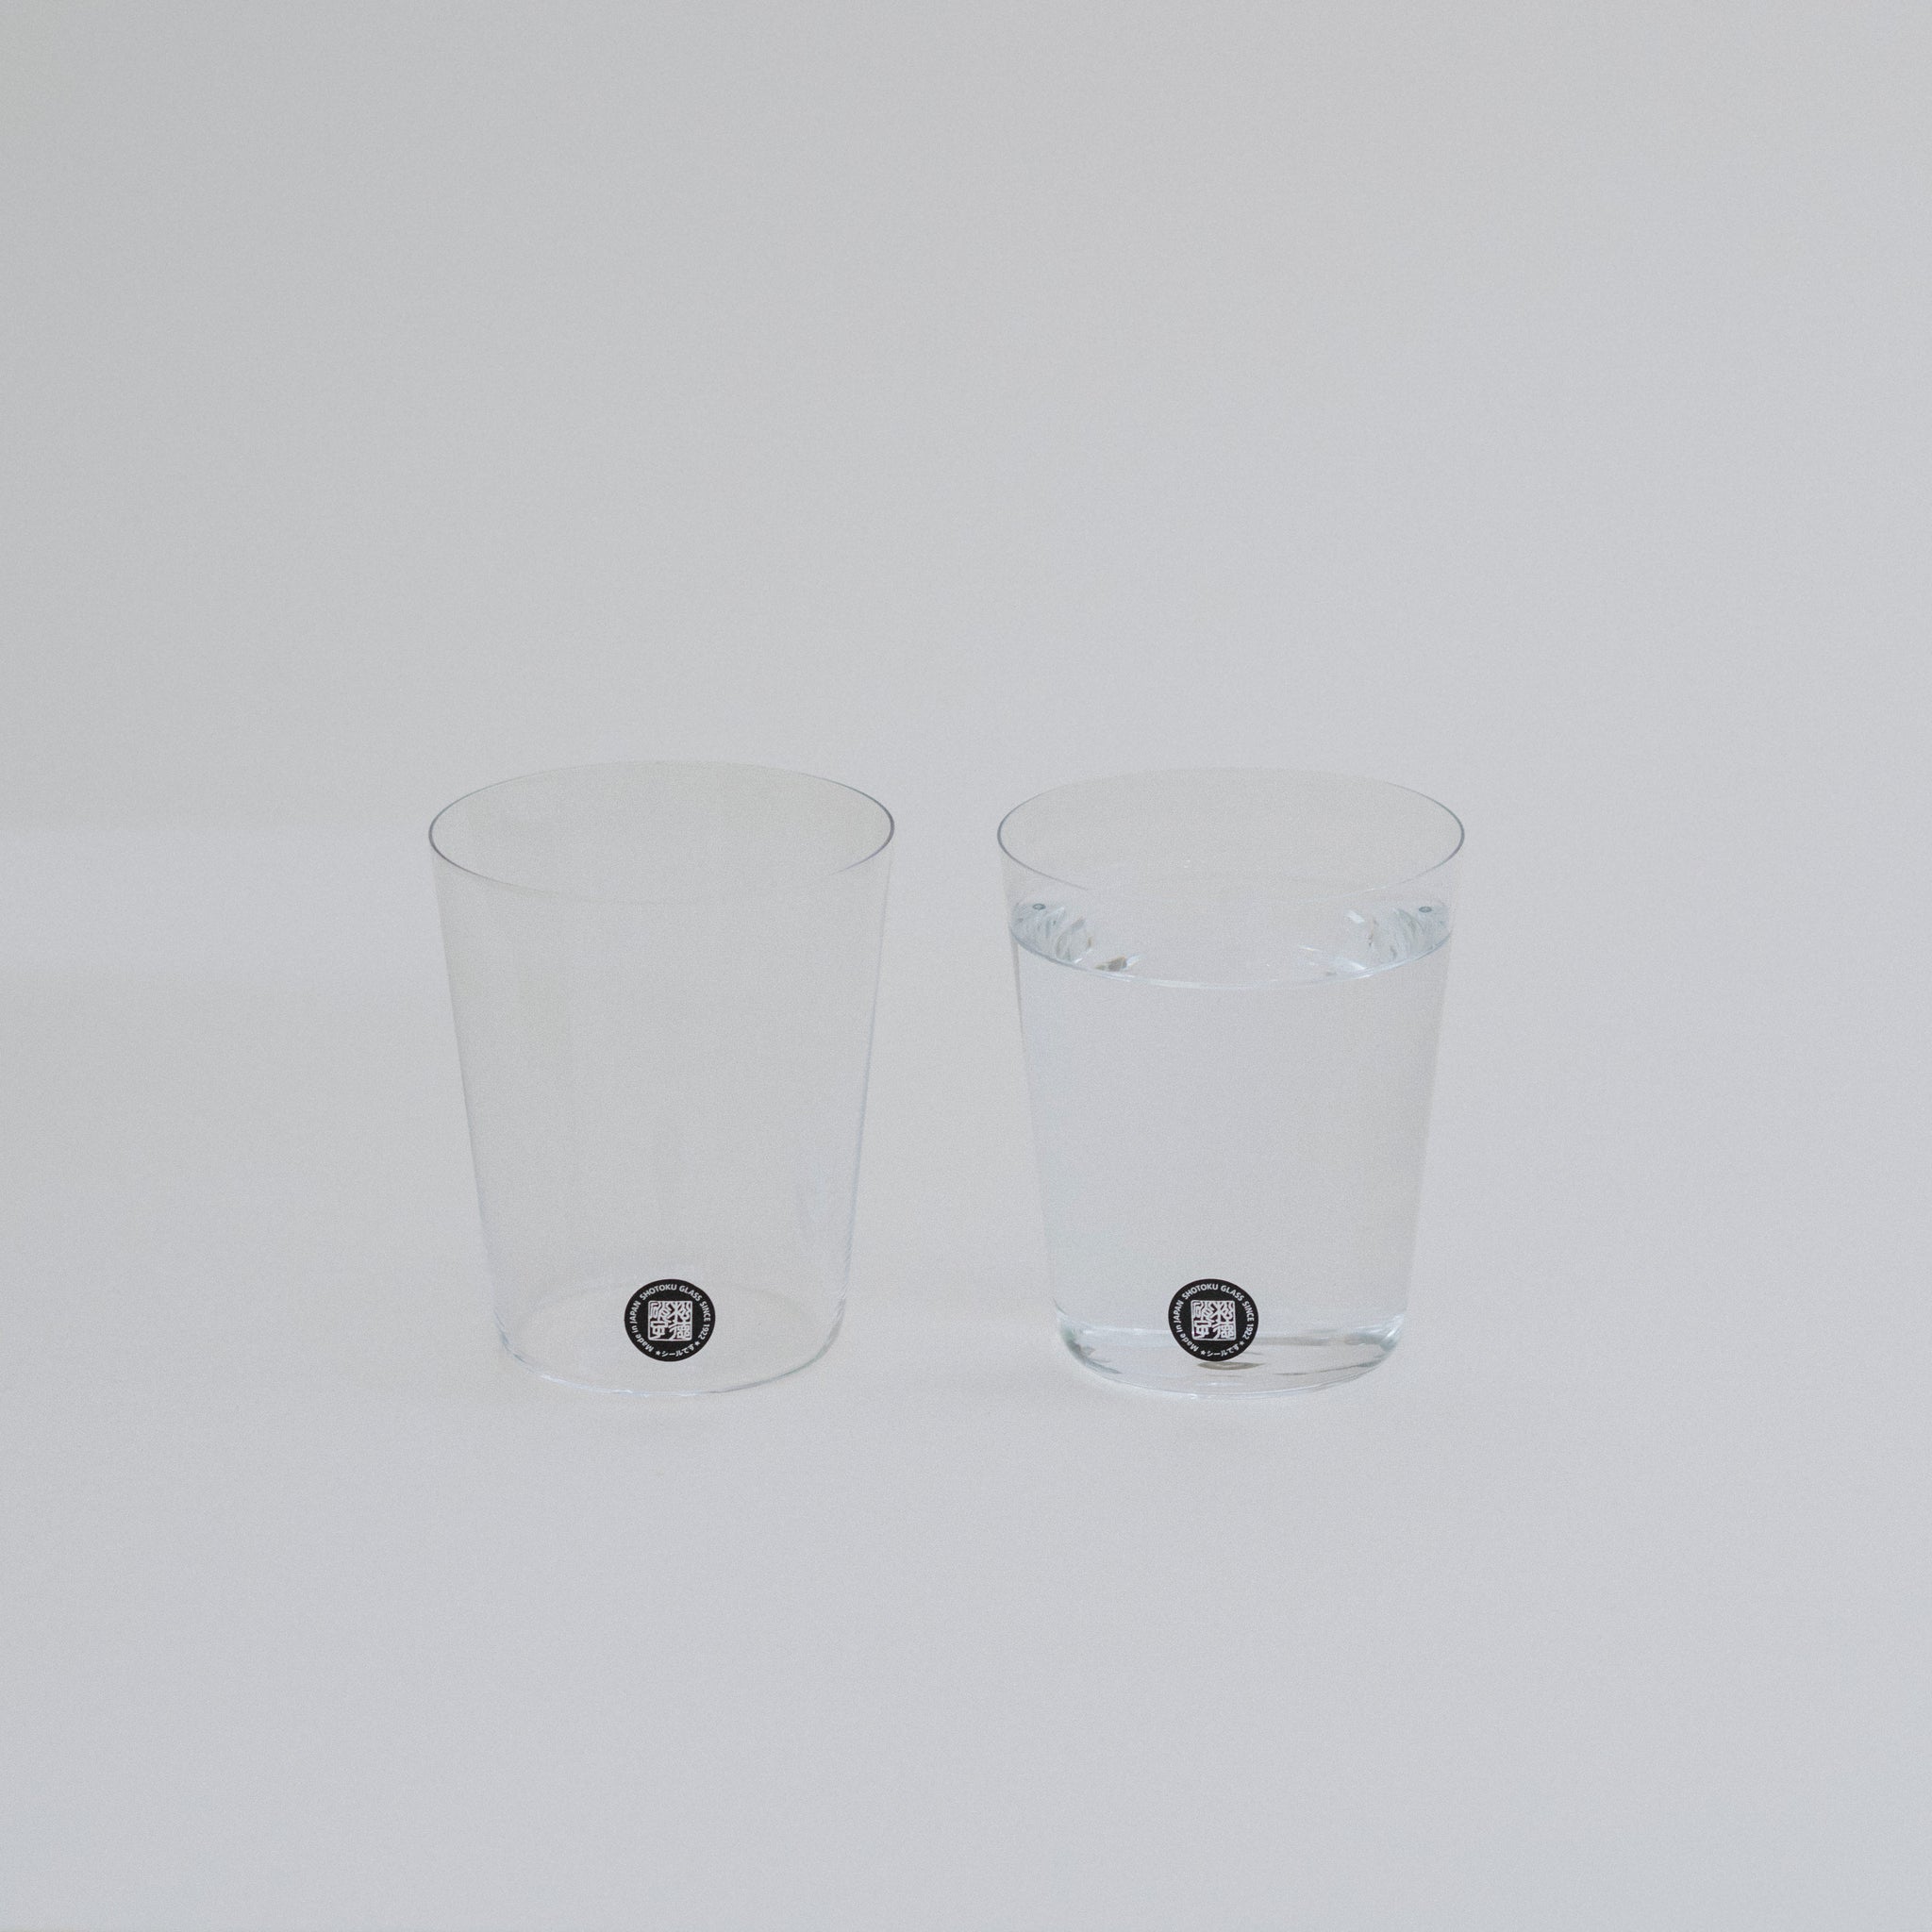 Pair of Ultra-thin Usuhari Glasses – M Size